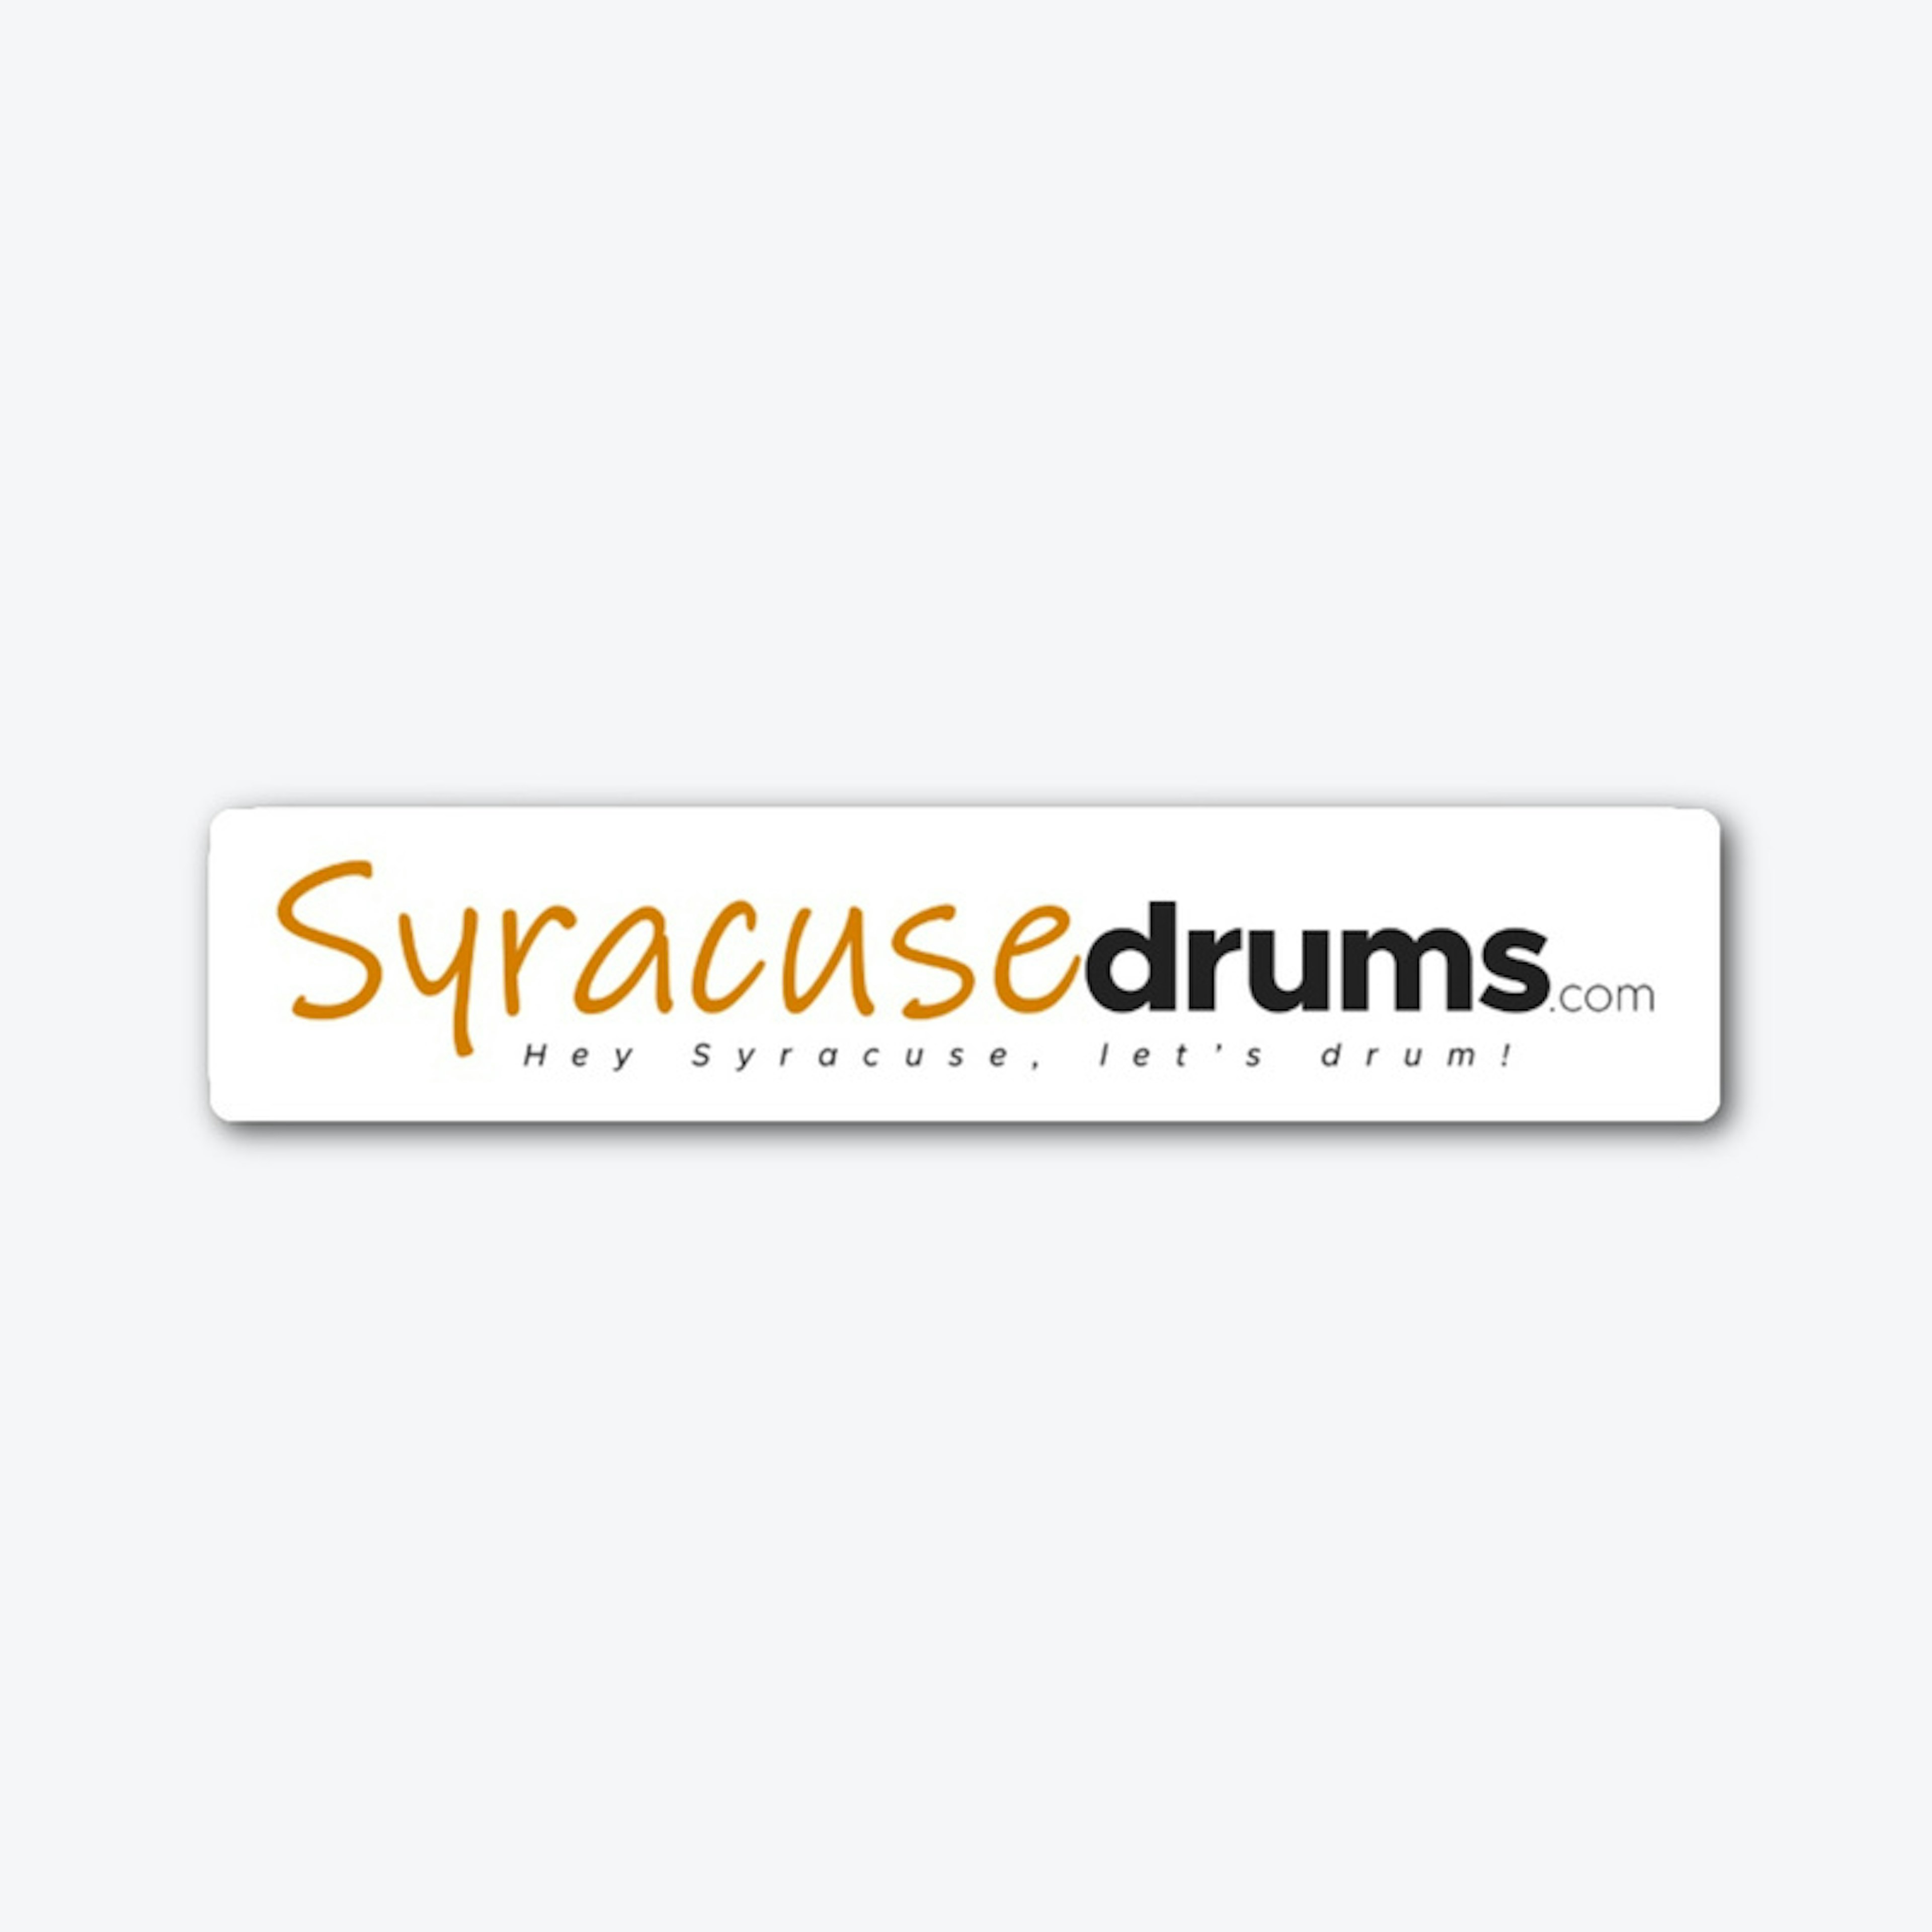 SyracuseDrums.com Stickers!